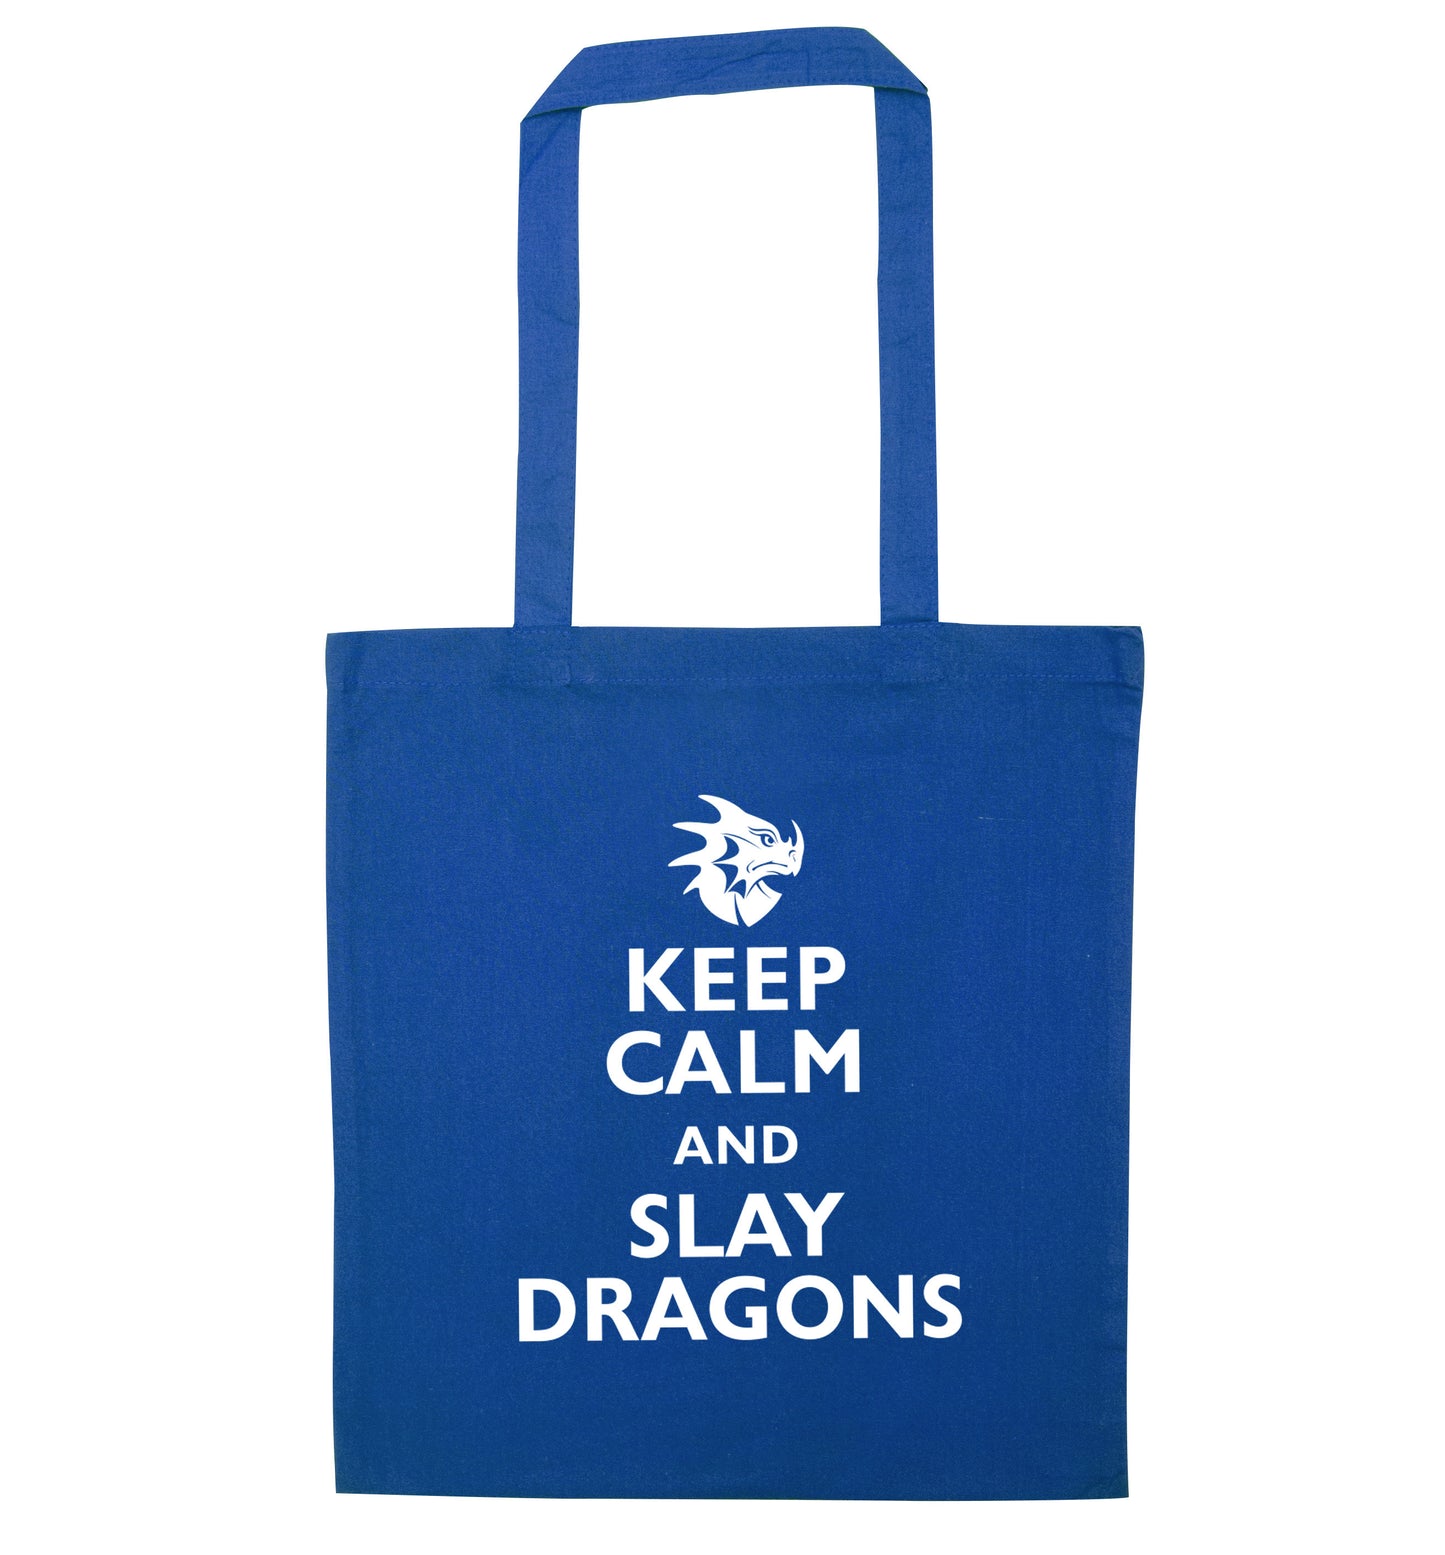 Keep calm and slay dragons blue tote bag